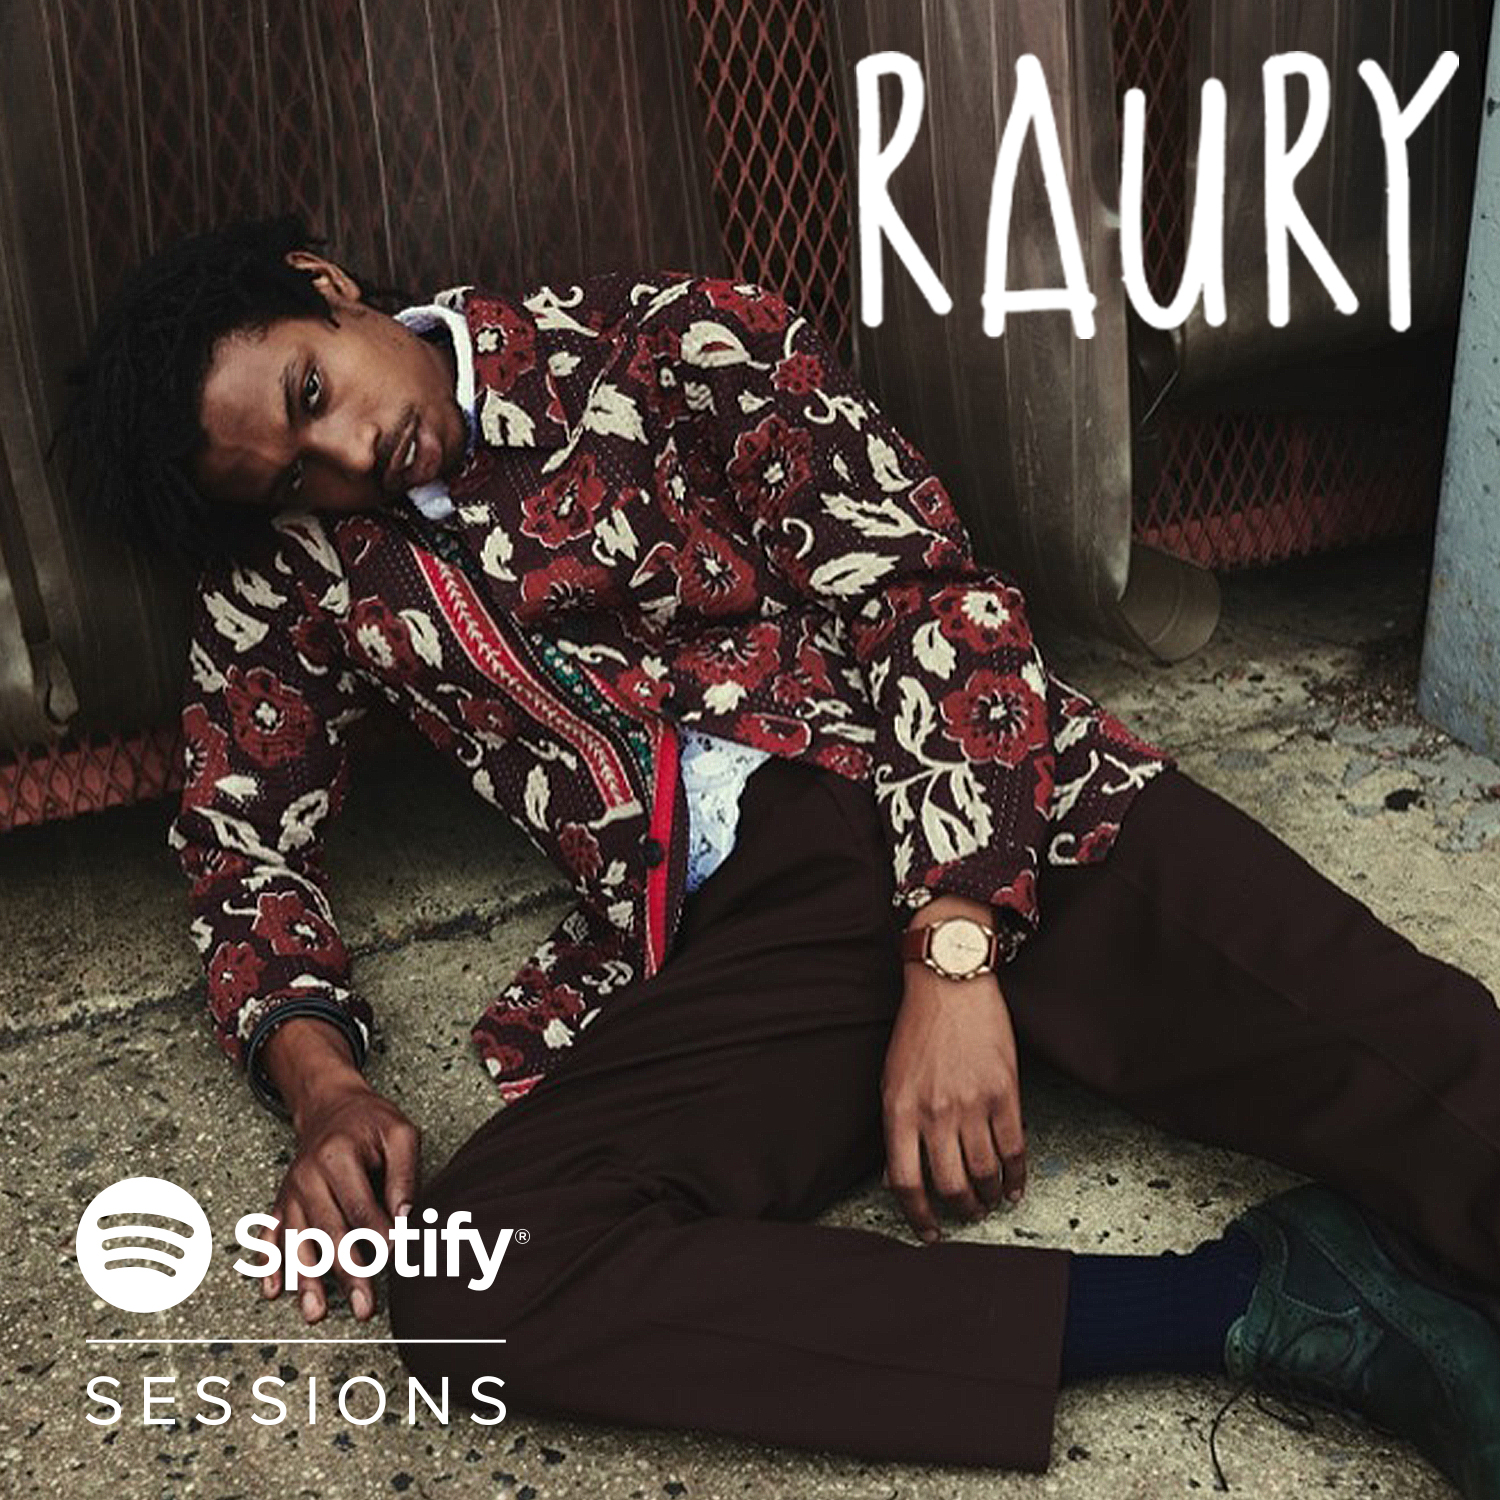 Raury - Spotify Session